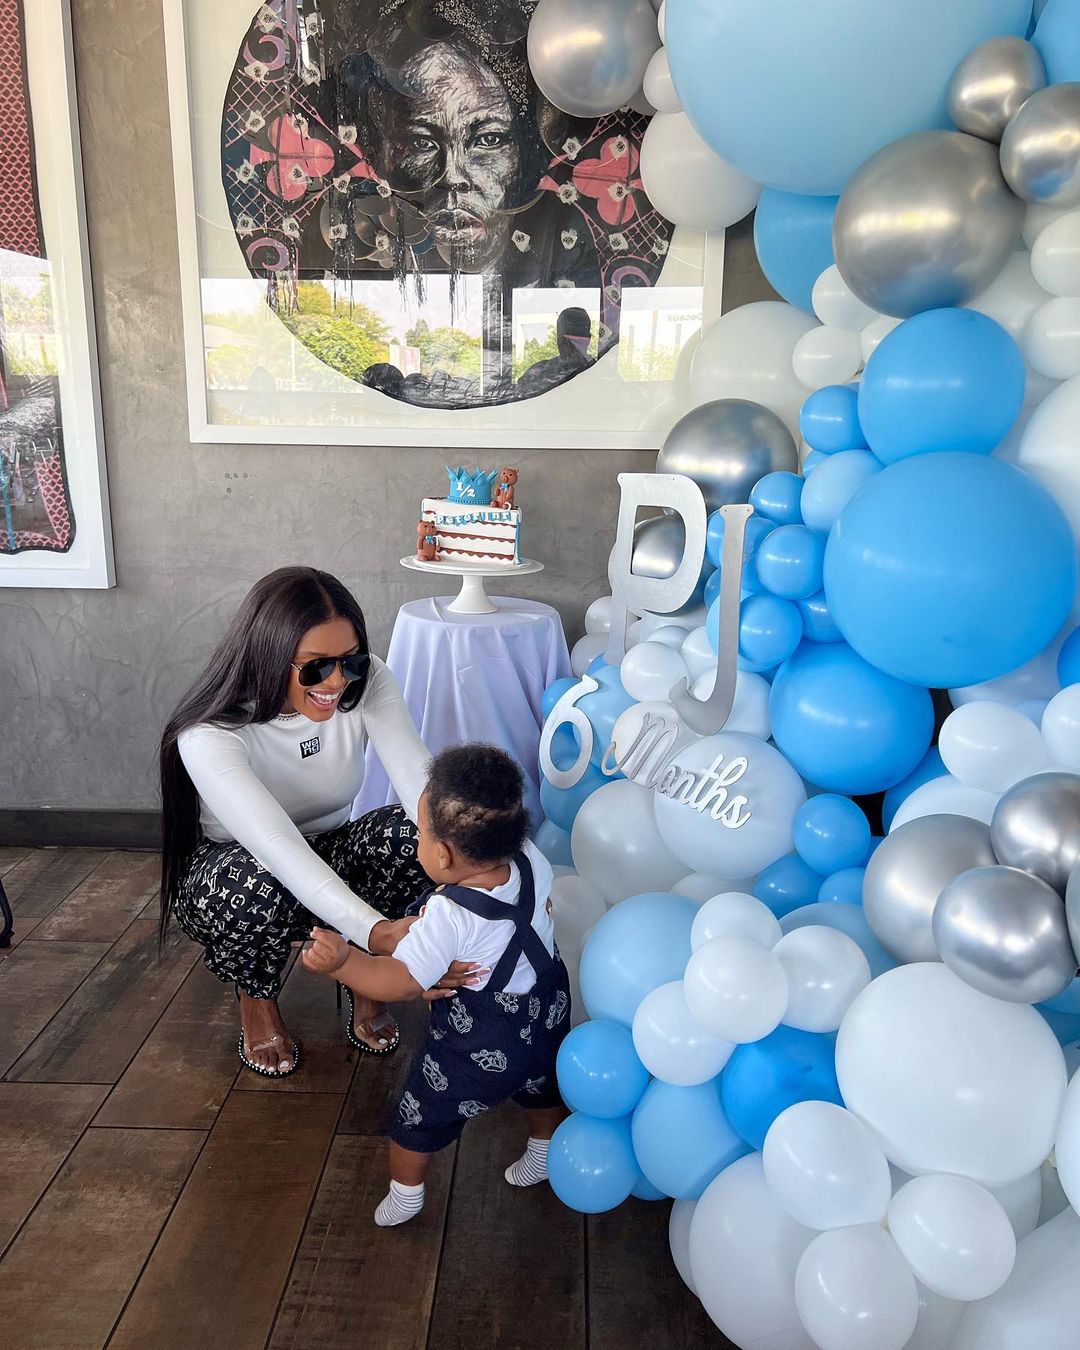 Ayanda Thabethe with her son on his birthday celebration